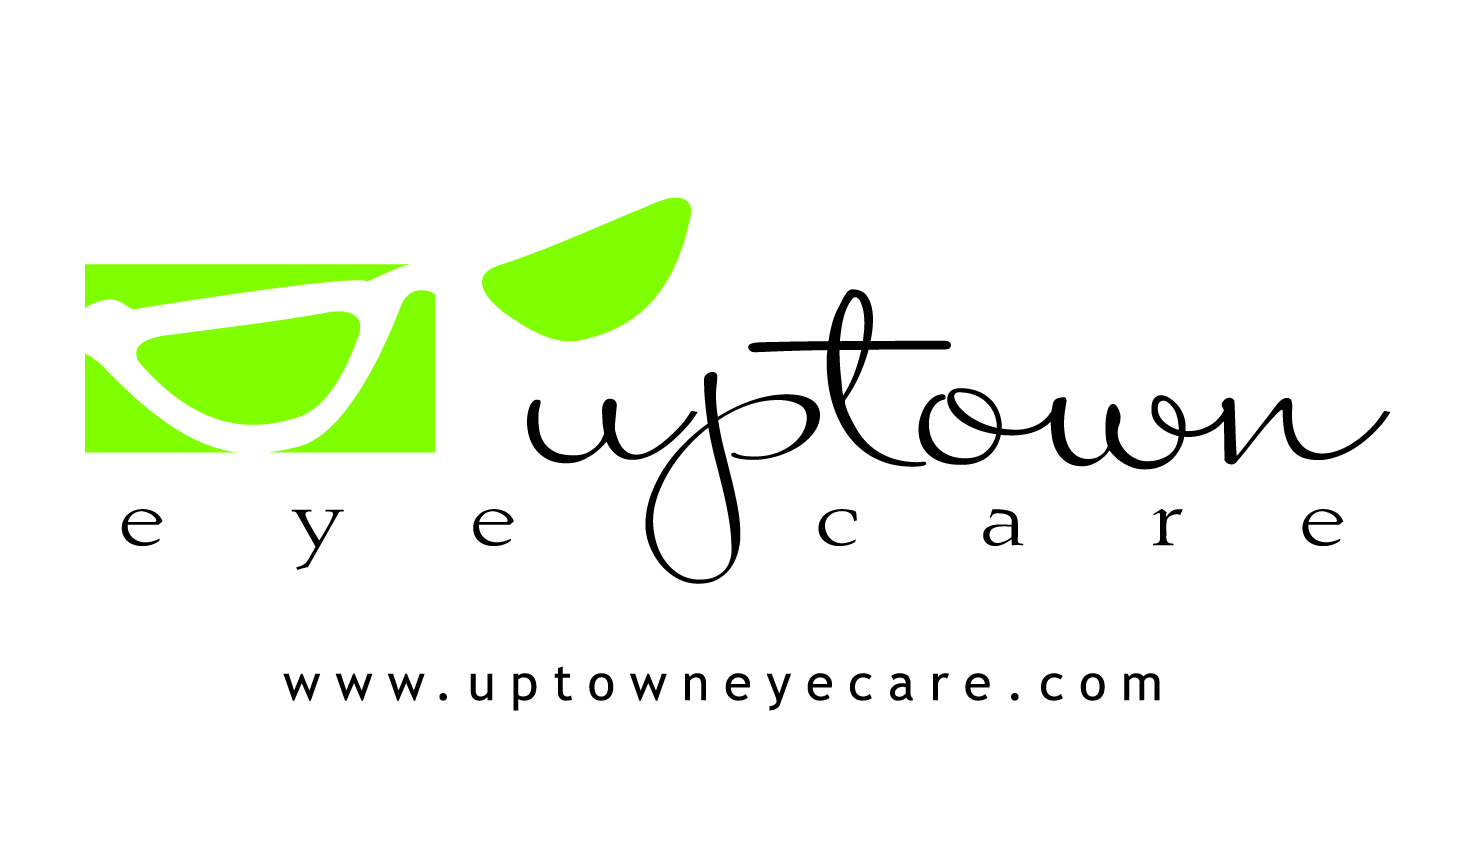 Uptown Eyecare